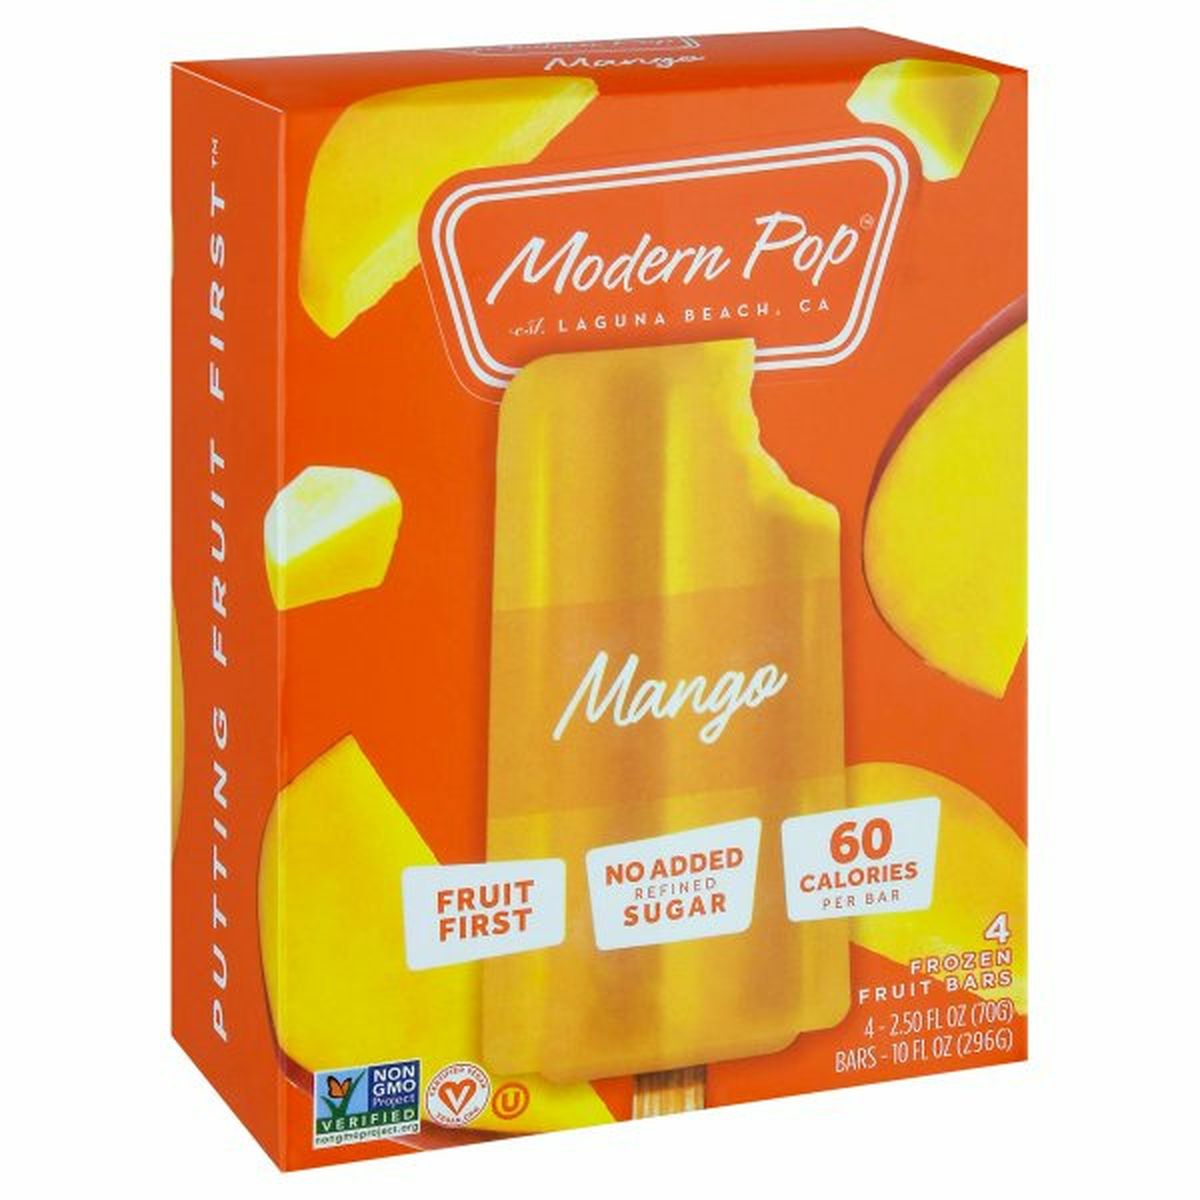 Calories in Modern Pop Frozen Fruit Bars, Mango